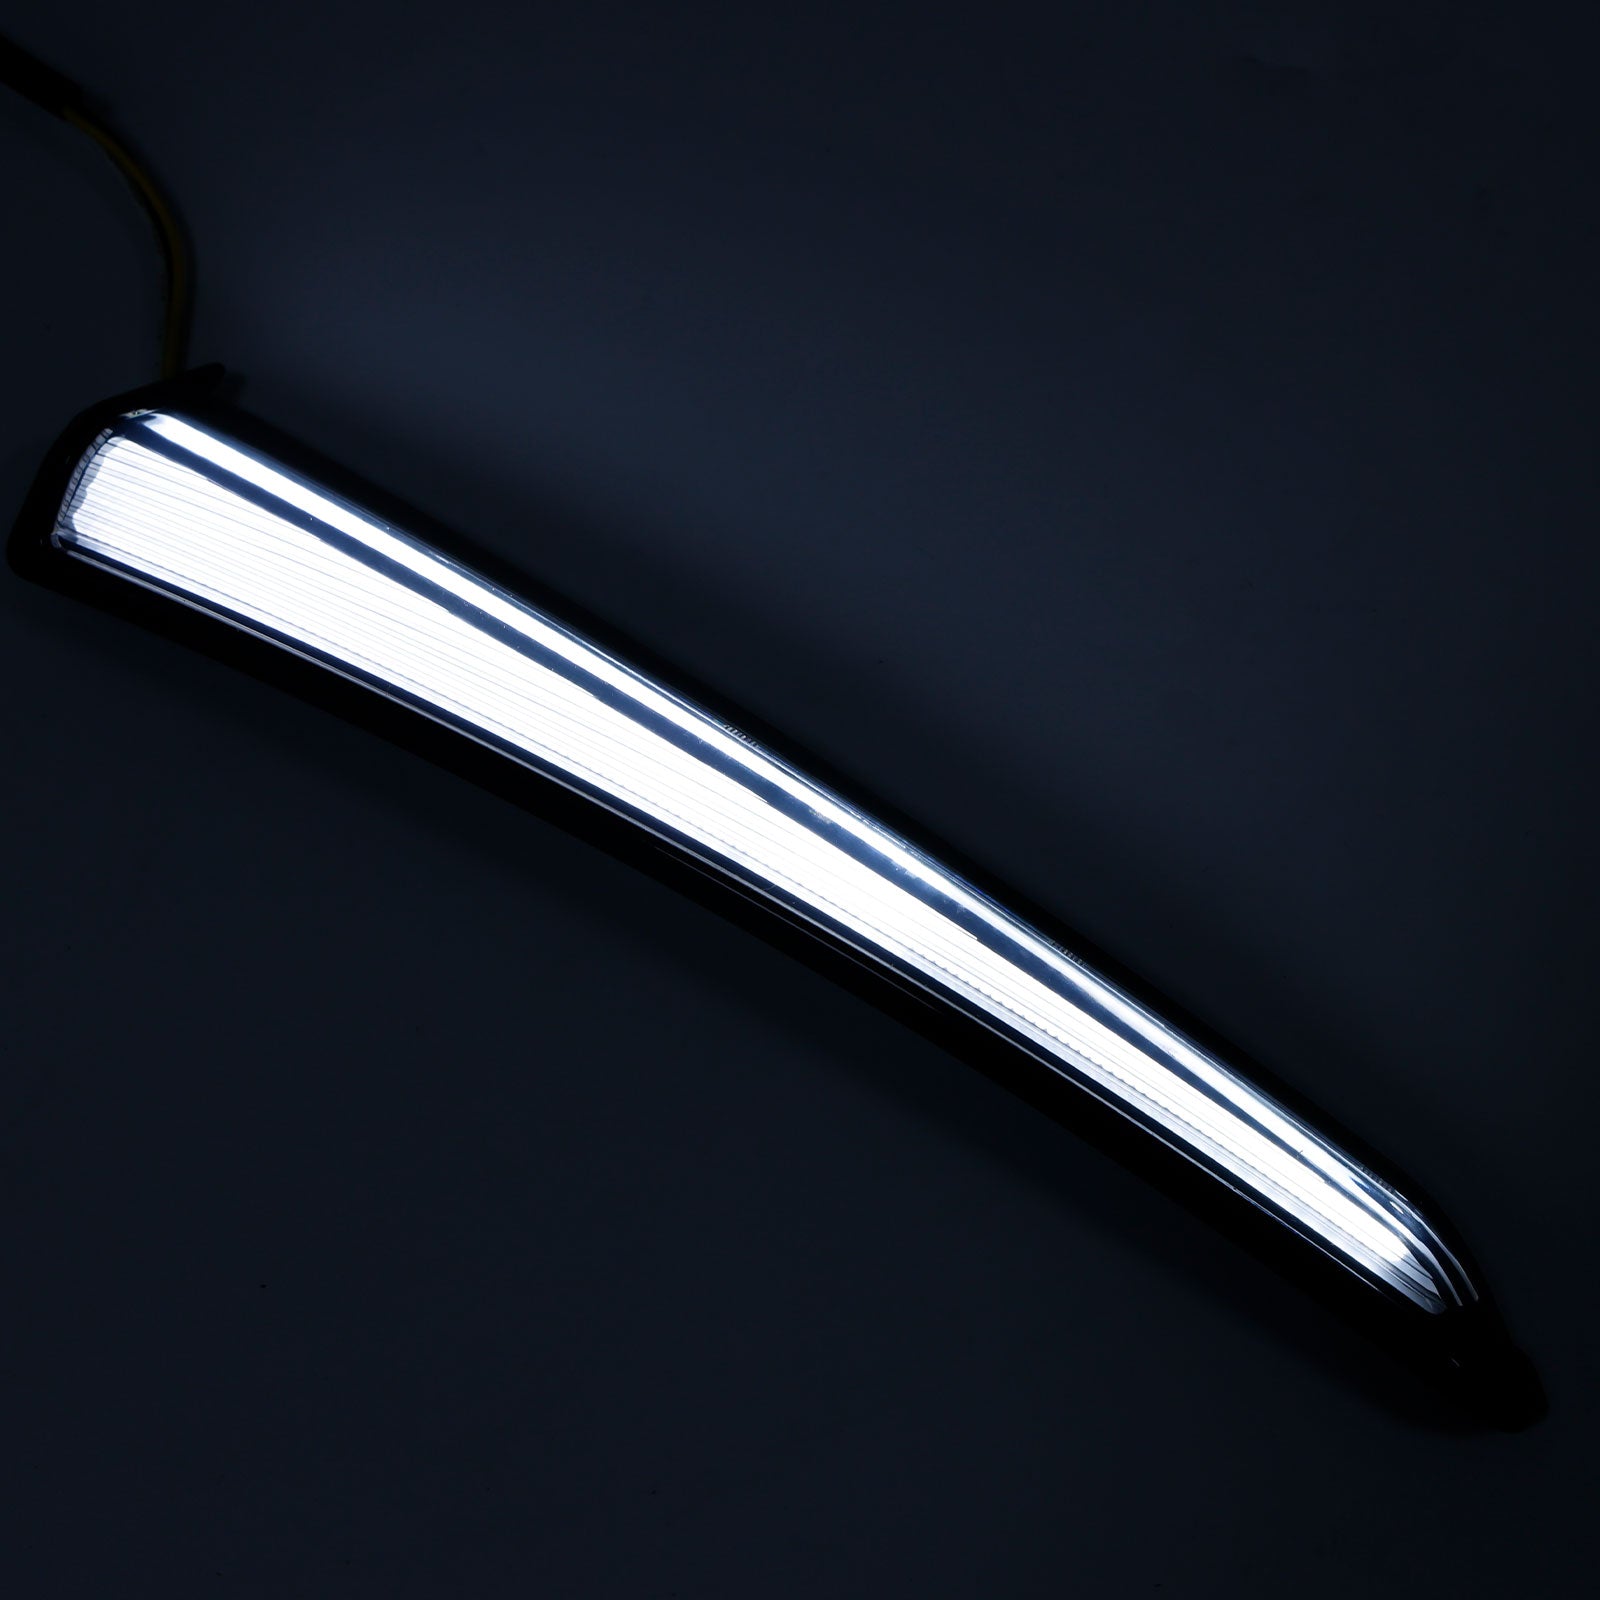 45801 Luci LED Fang per carenatura inferiore per Touring Road Glide 2014-2023